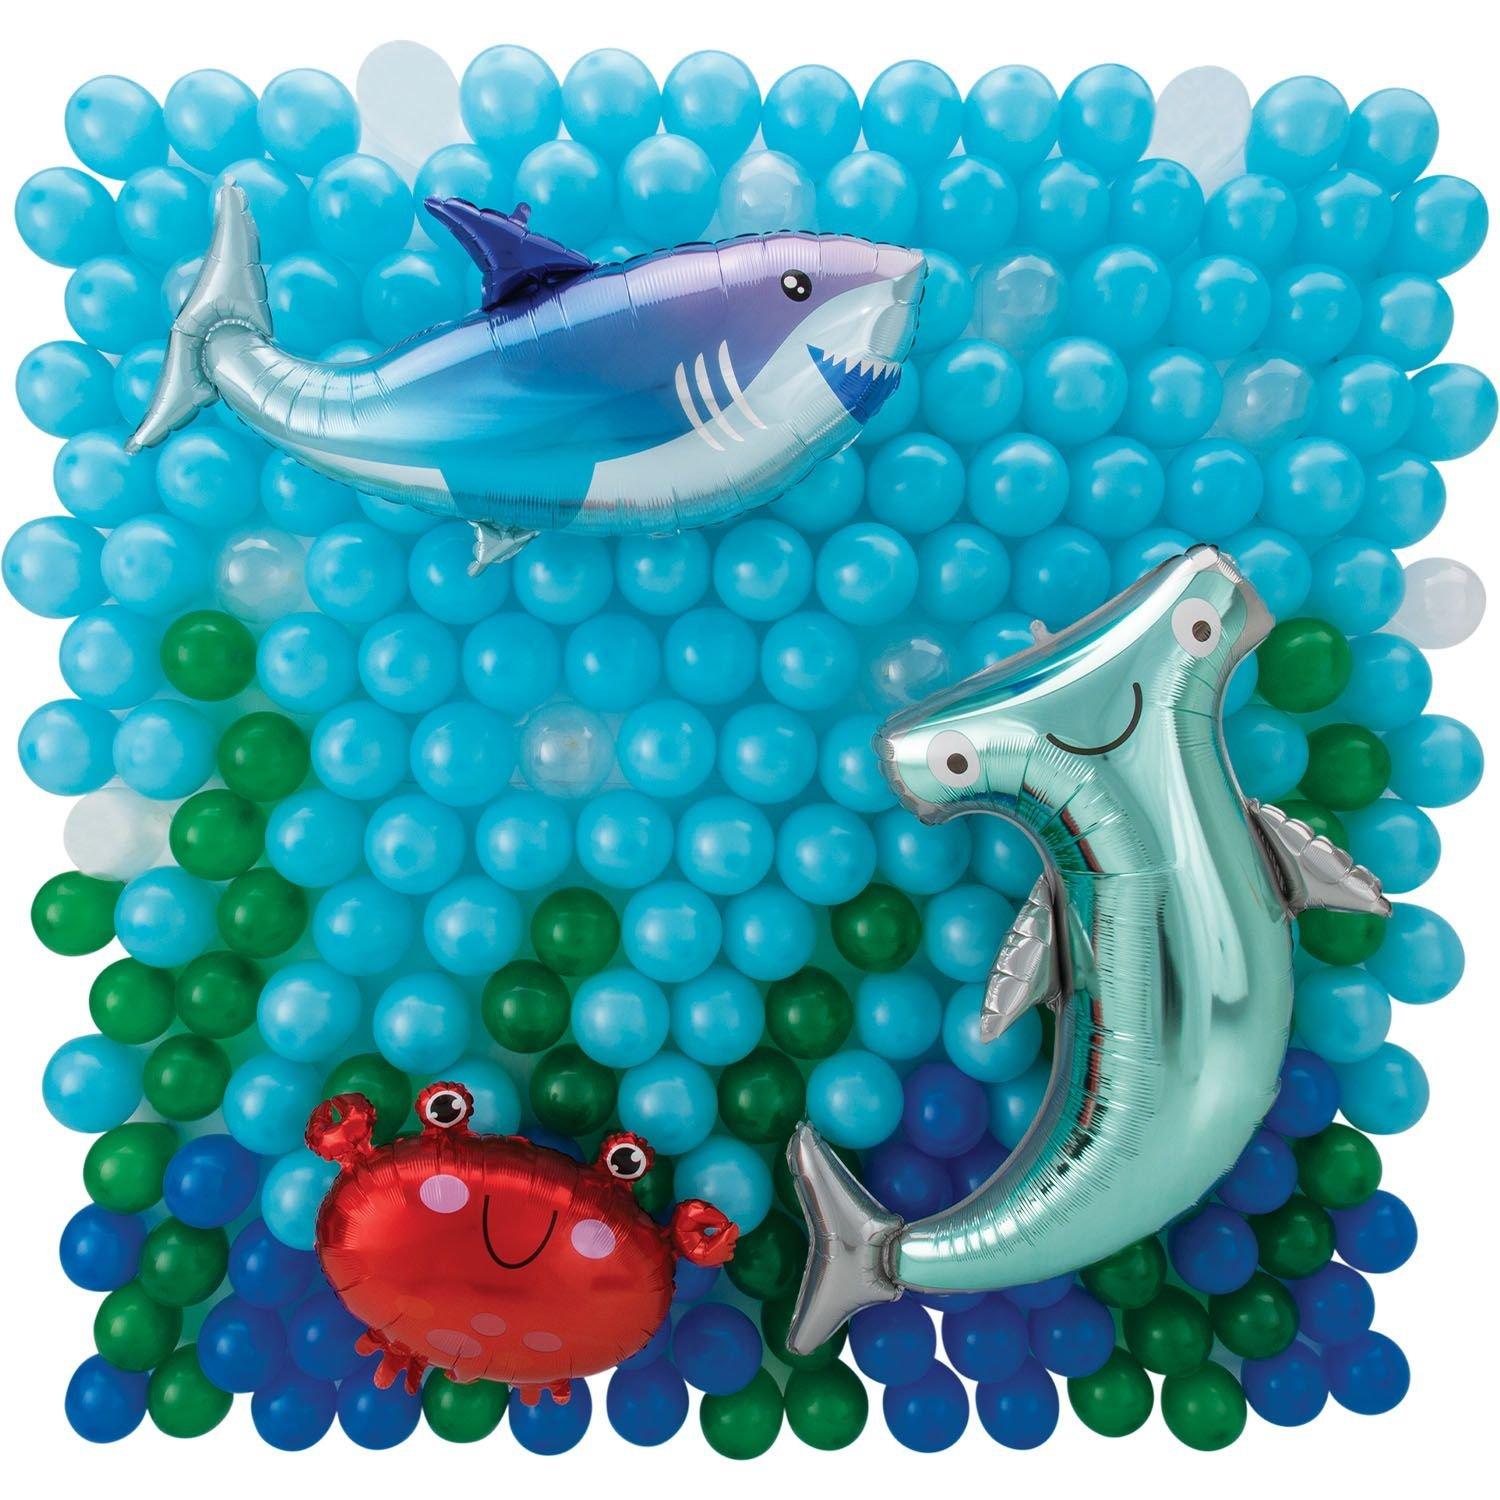 Air-Filled Sea Crab & Shark Foil & Latex Balloon Backdrop Kit, 6.25ft x 5.9ft